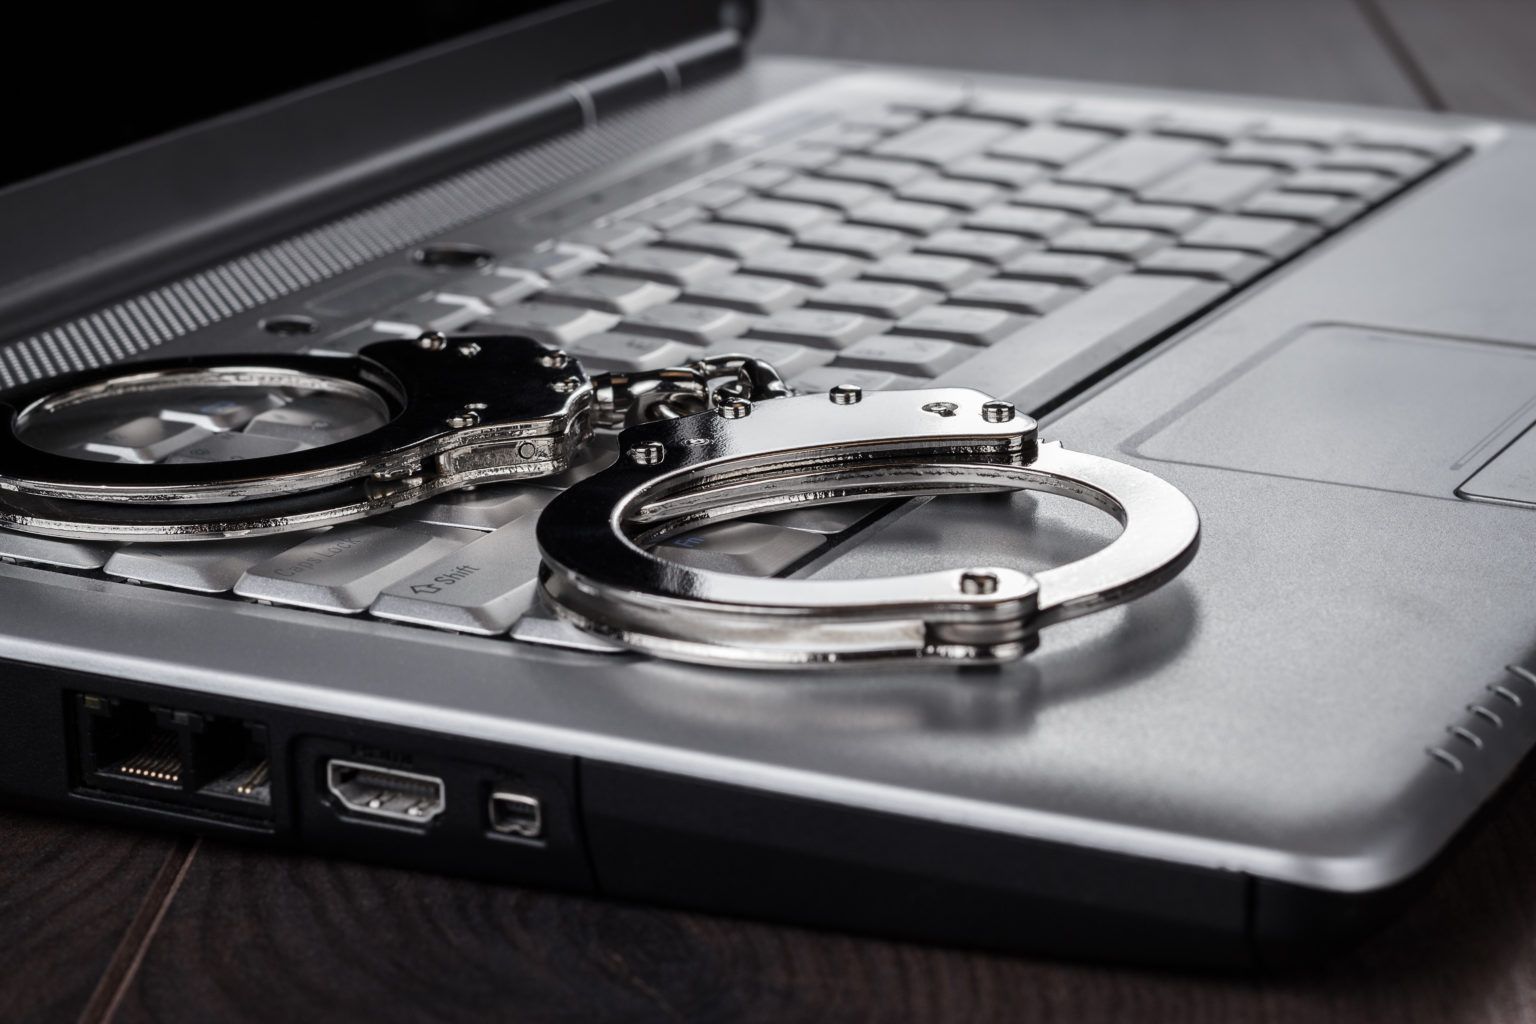 /assets/Uploads/Crime-Criminal-Justice/School-of-Law-CCJ-handcuffs-on-laptop-cyber-crime-concept-P3J7FHN-1.jpg